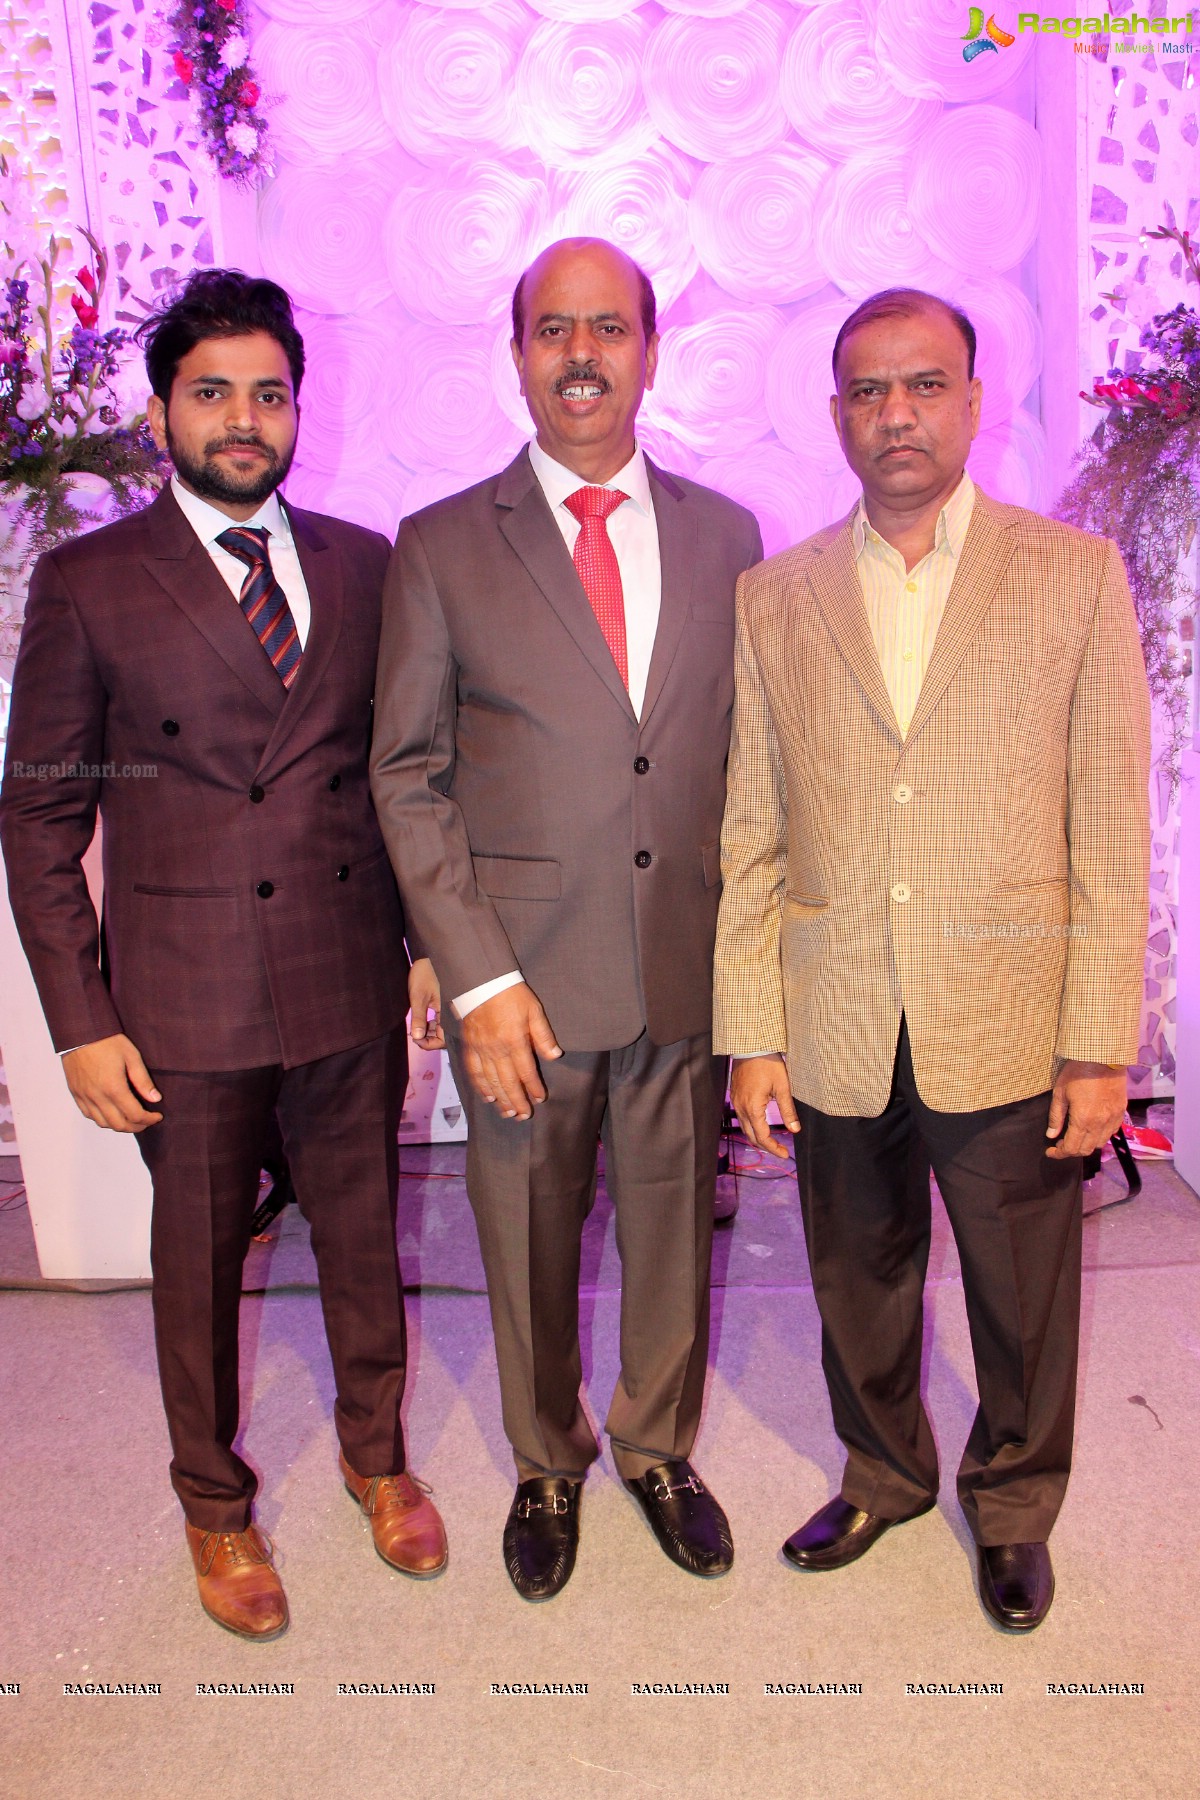 Grand Wedding Reception of Khalid Shareef's Son Saif Khalid Shareef at SS Convention